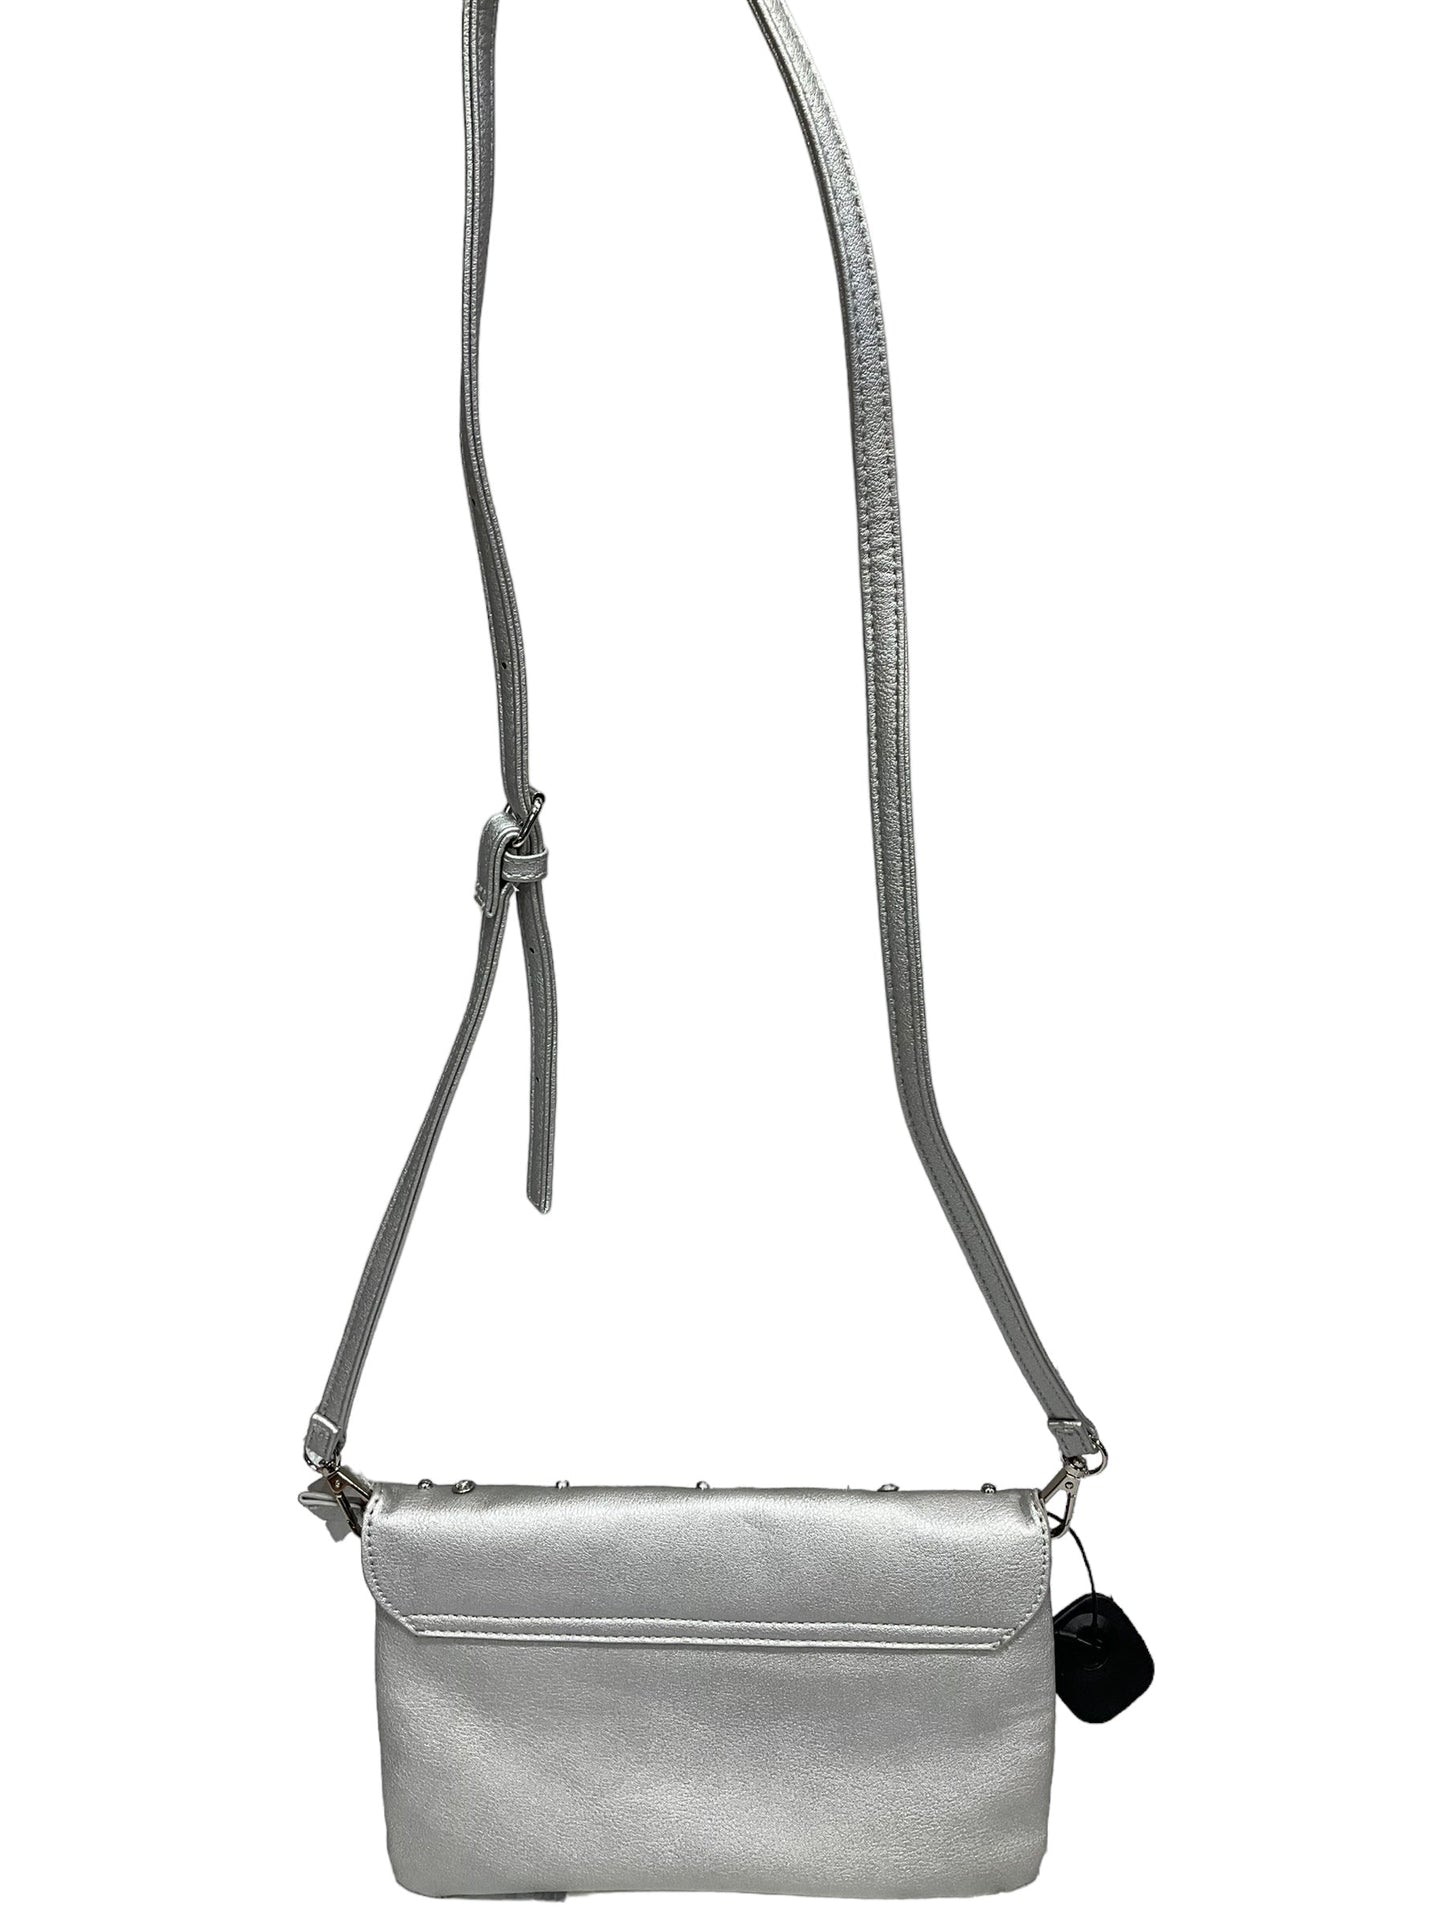 Handbag By Charming Charlie  Size: Small